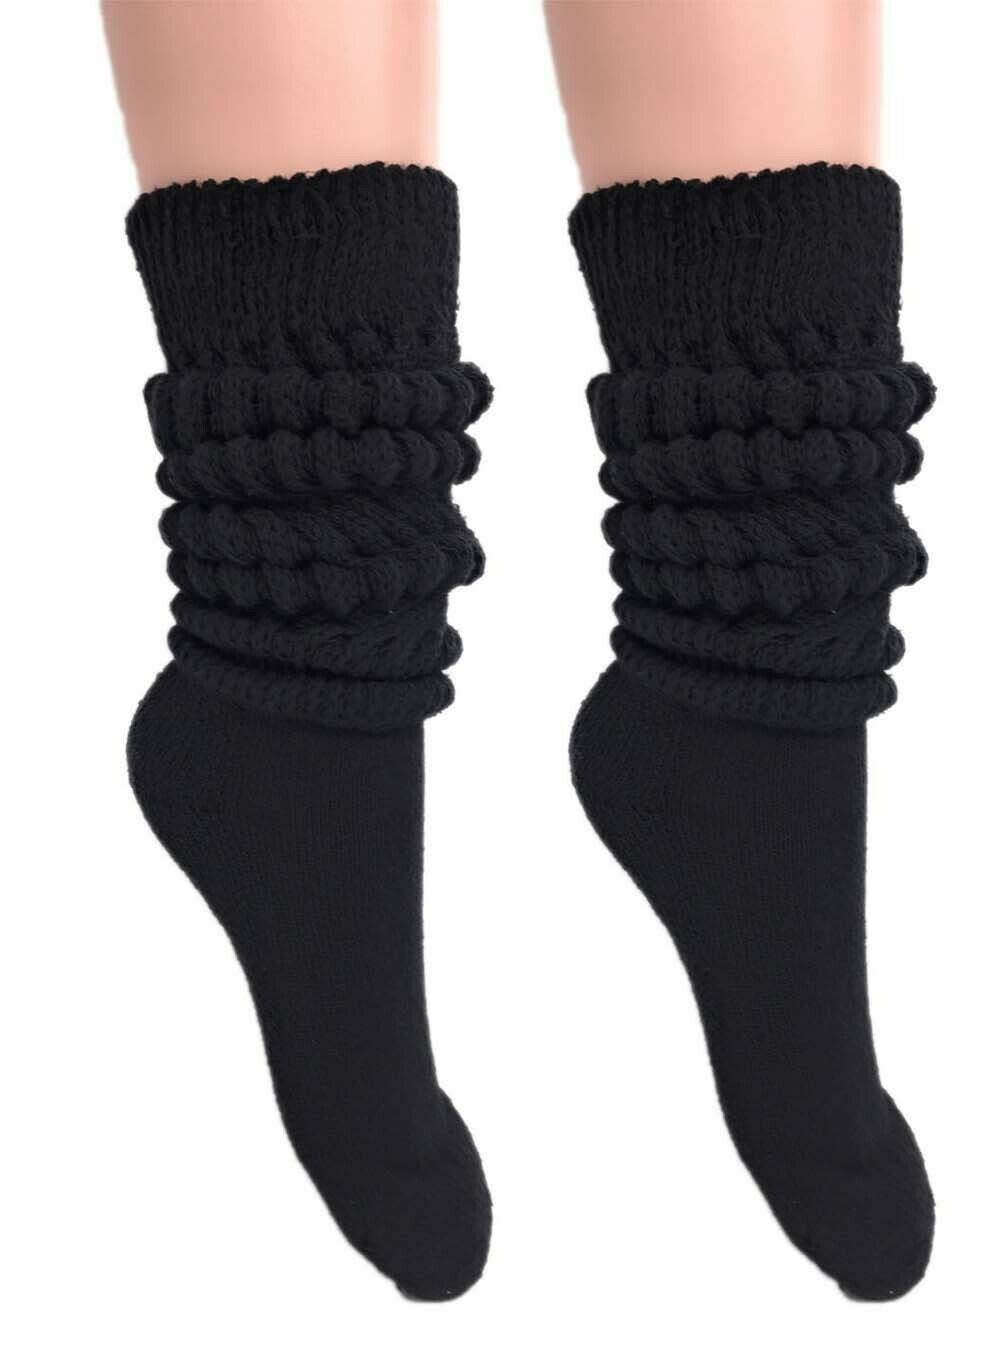 Slouch Socks Women and Men Extra Tall Heavy Socks 2 PAIRS Size 9-11